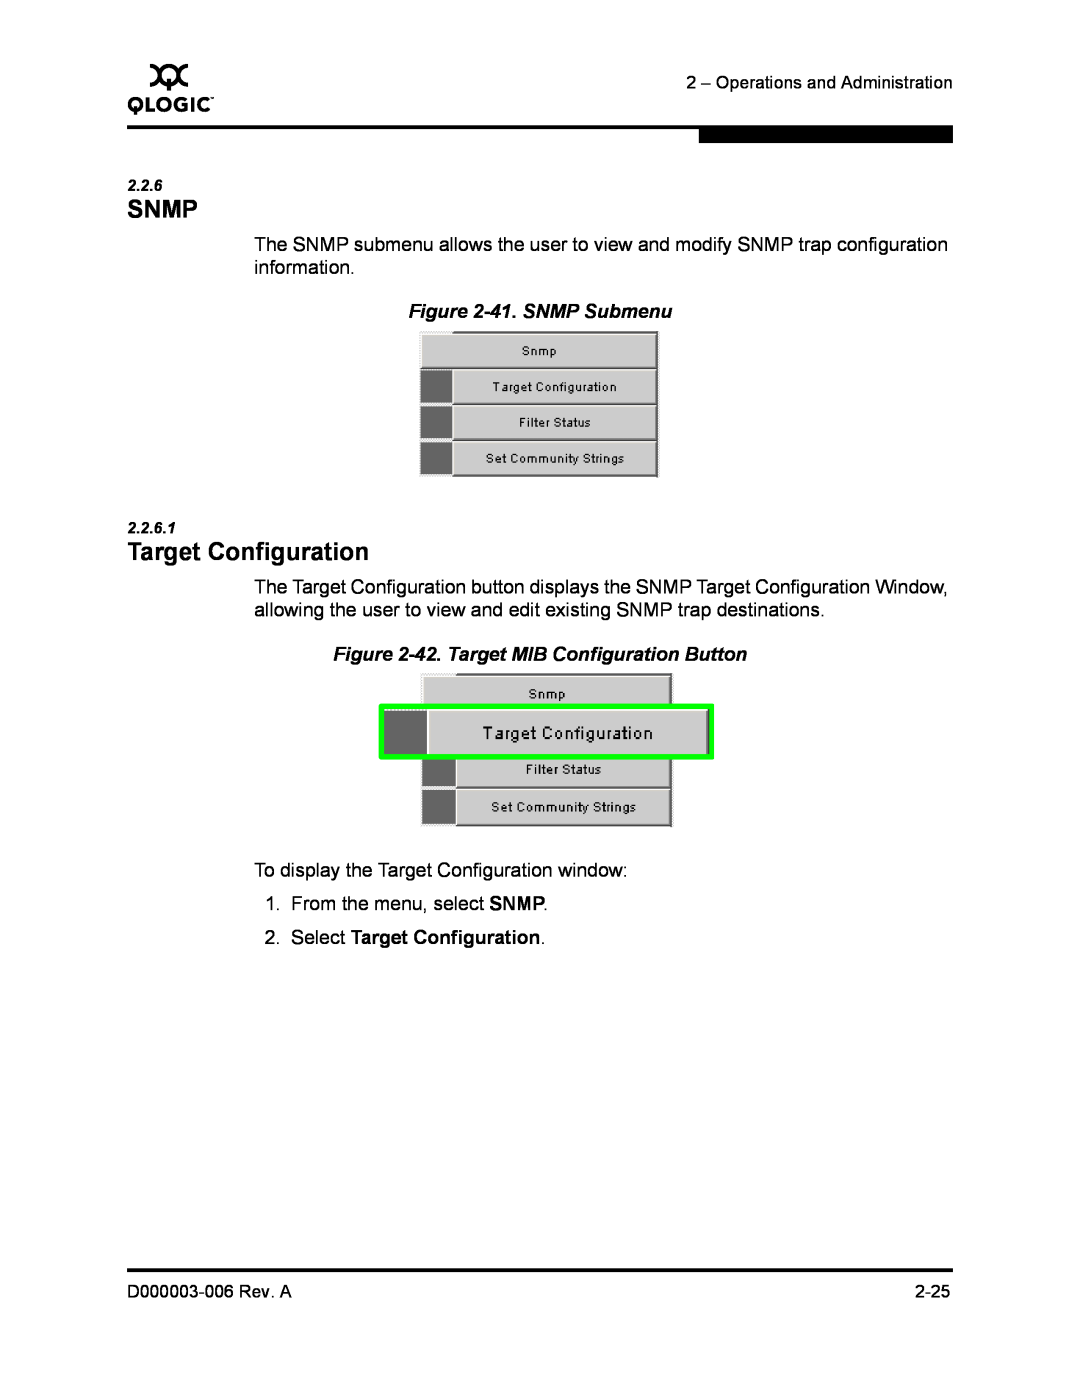 Q-Logic 9000 manual Snmp, Target Configuration, 41. SNMP Submenu, 42. Target MIB Configuration Button 